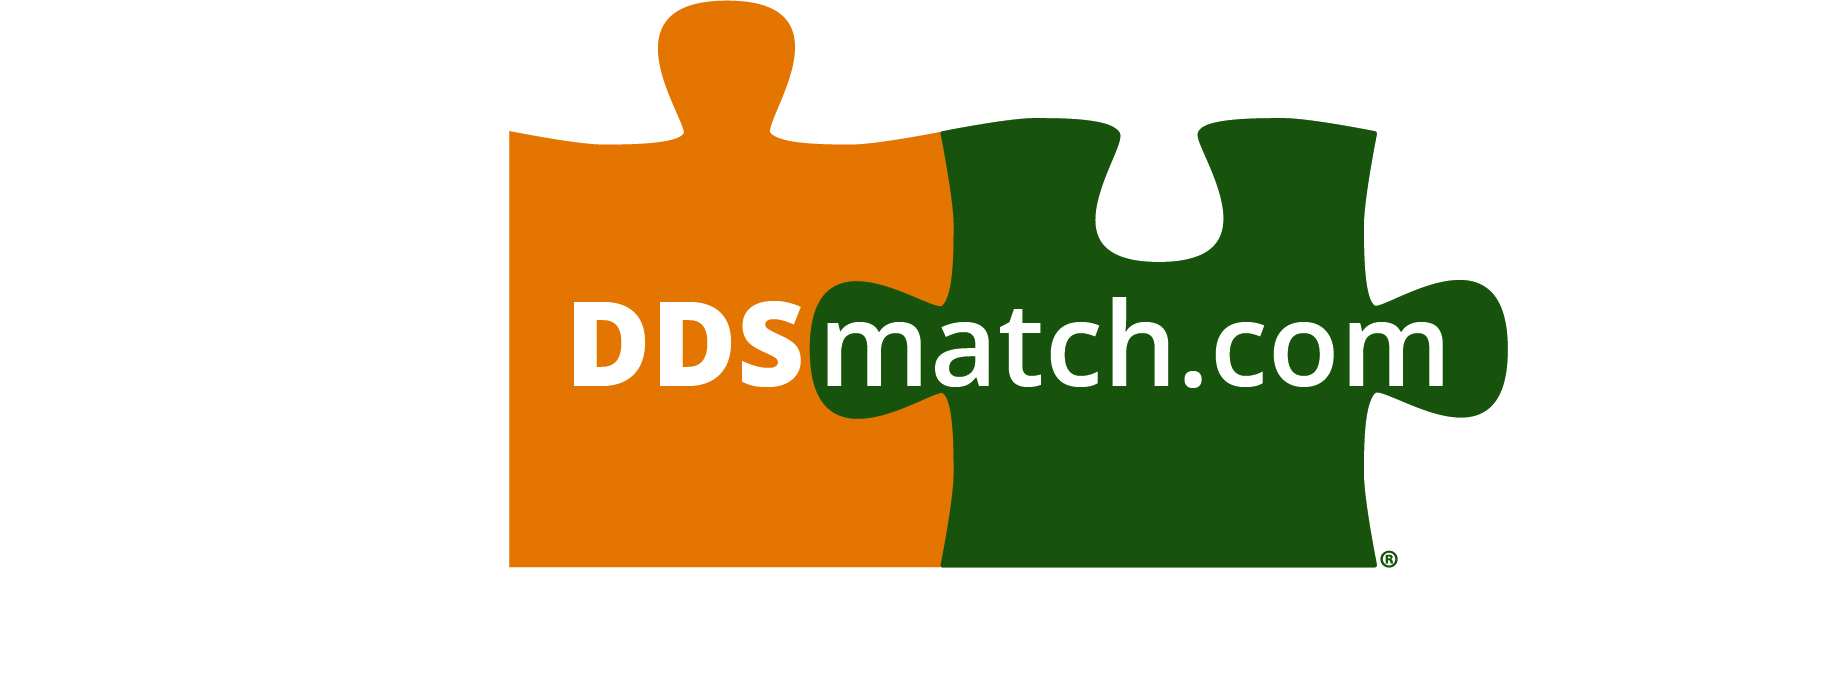 ddsmatch.com - Randy Kinnison Logo